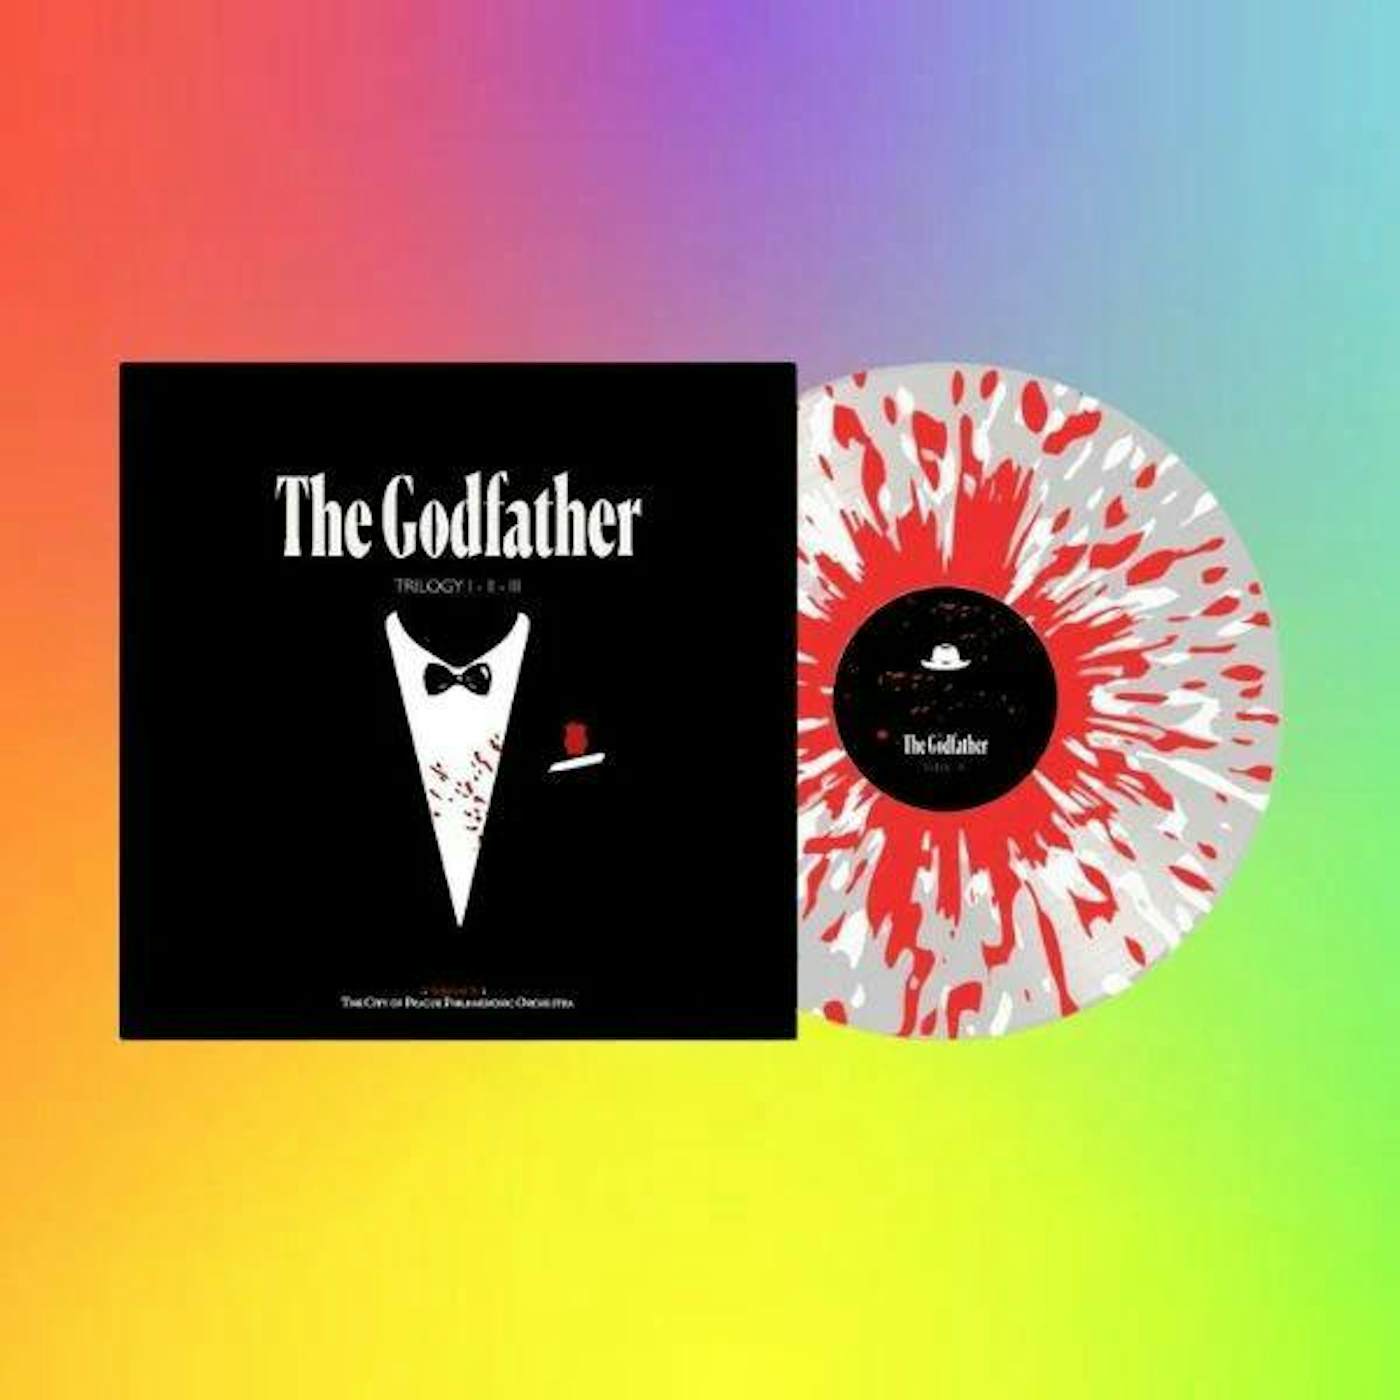 The City of Prague Philharmonic Orchestra Godfather Trilogy I - II - III (Splatter Grey & Red vinyl/2LP) vinyl record